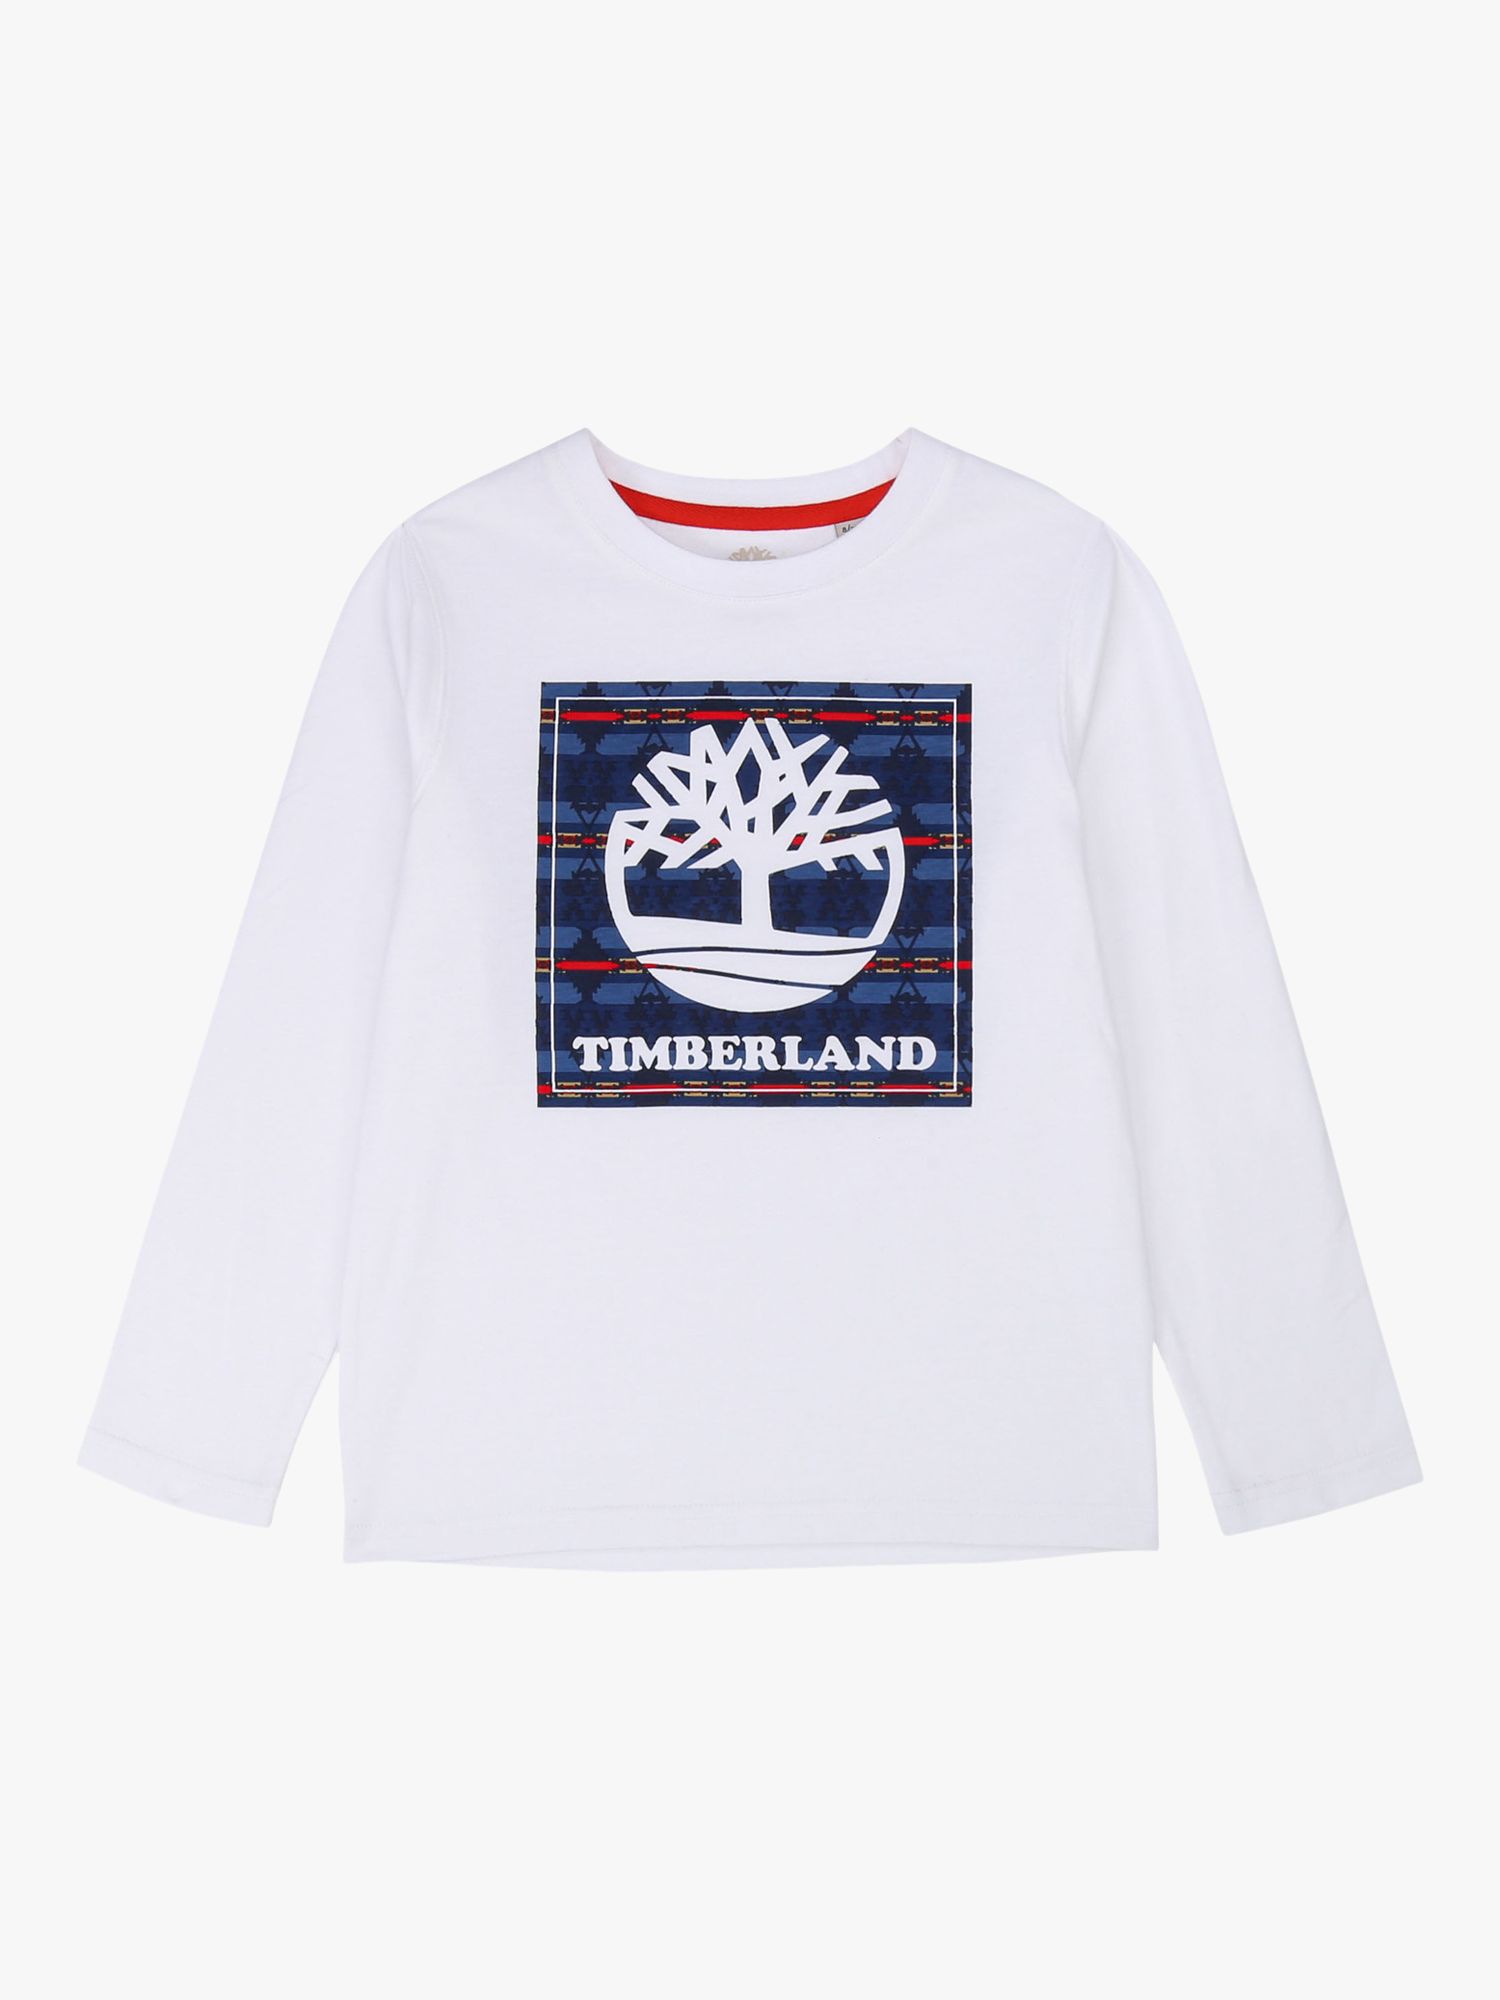 timberland boys shirts